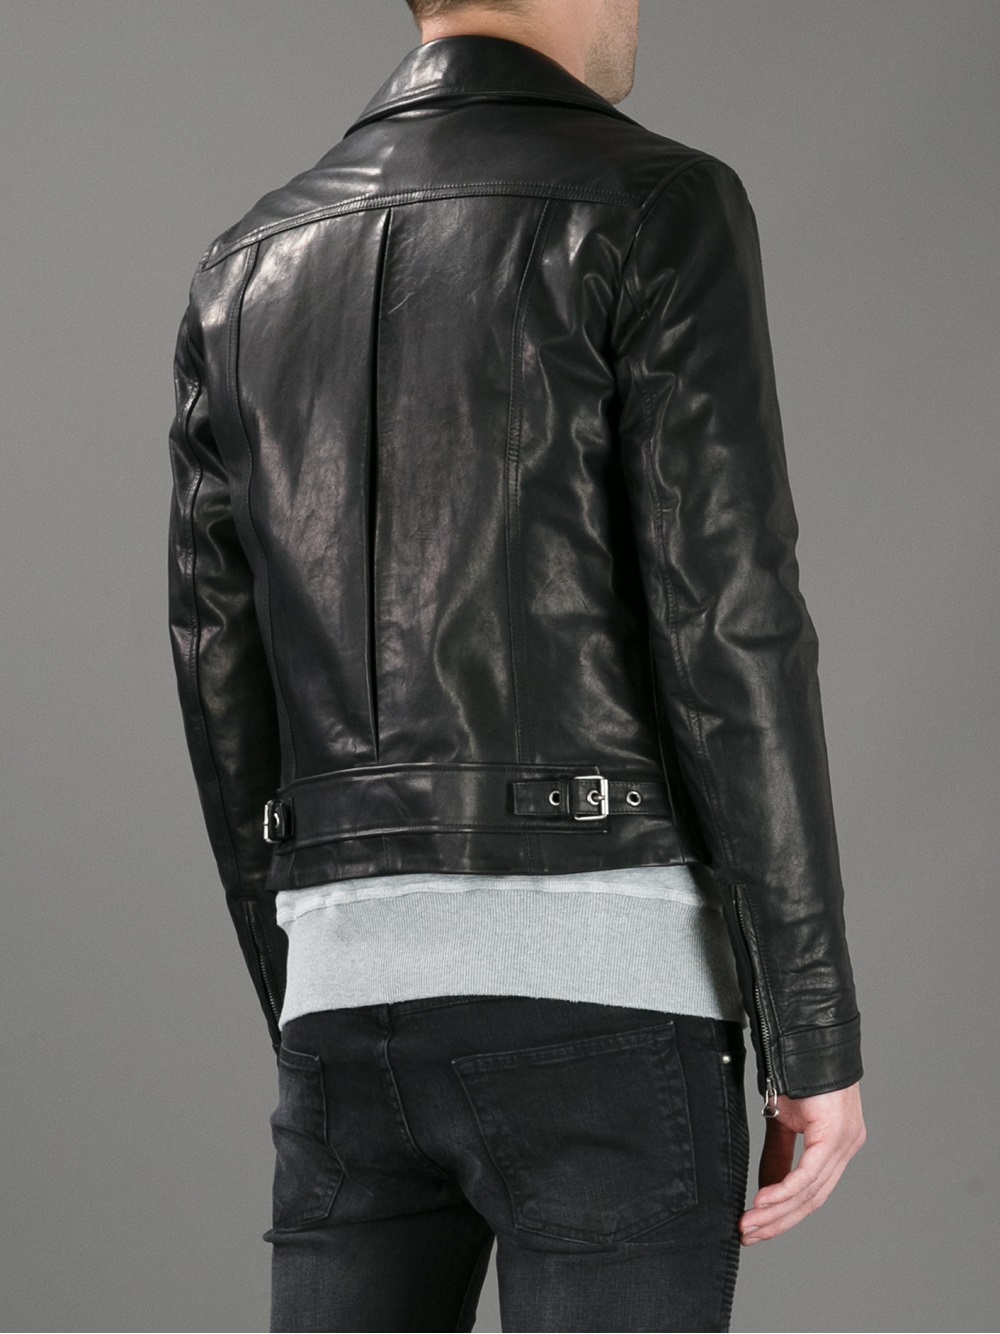 Balmain Leather Biker Jacket in Black for Men - Lyst